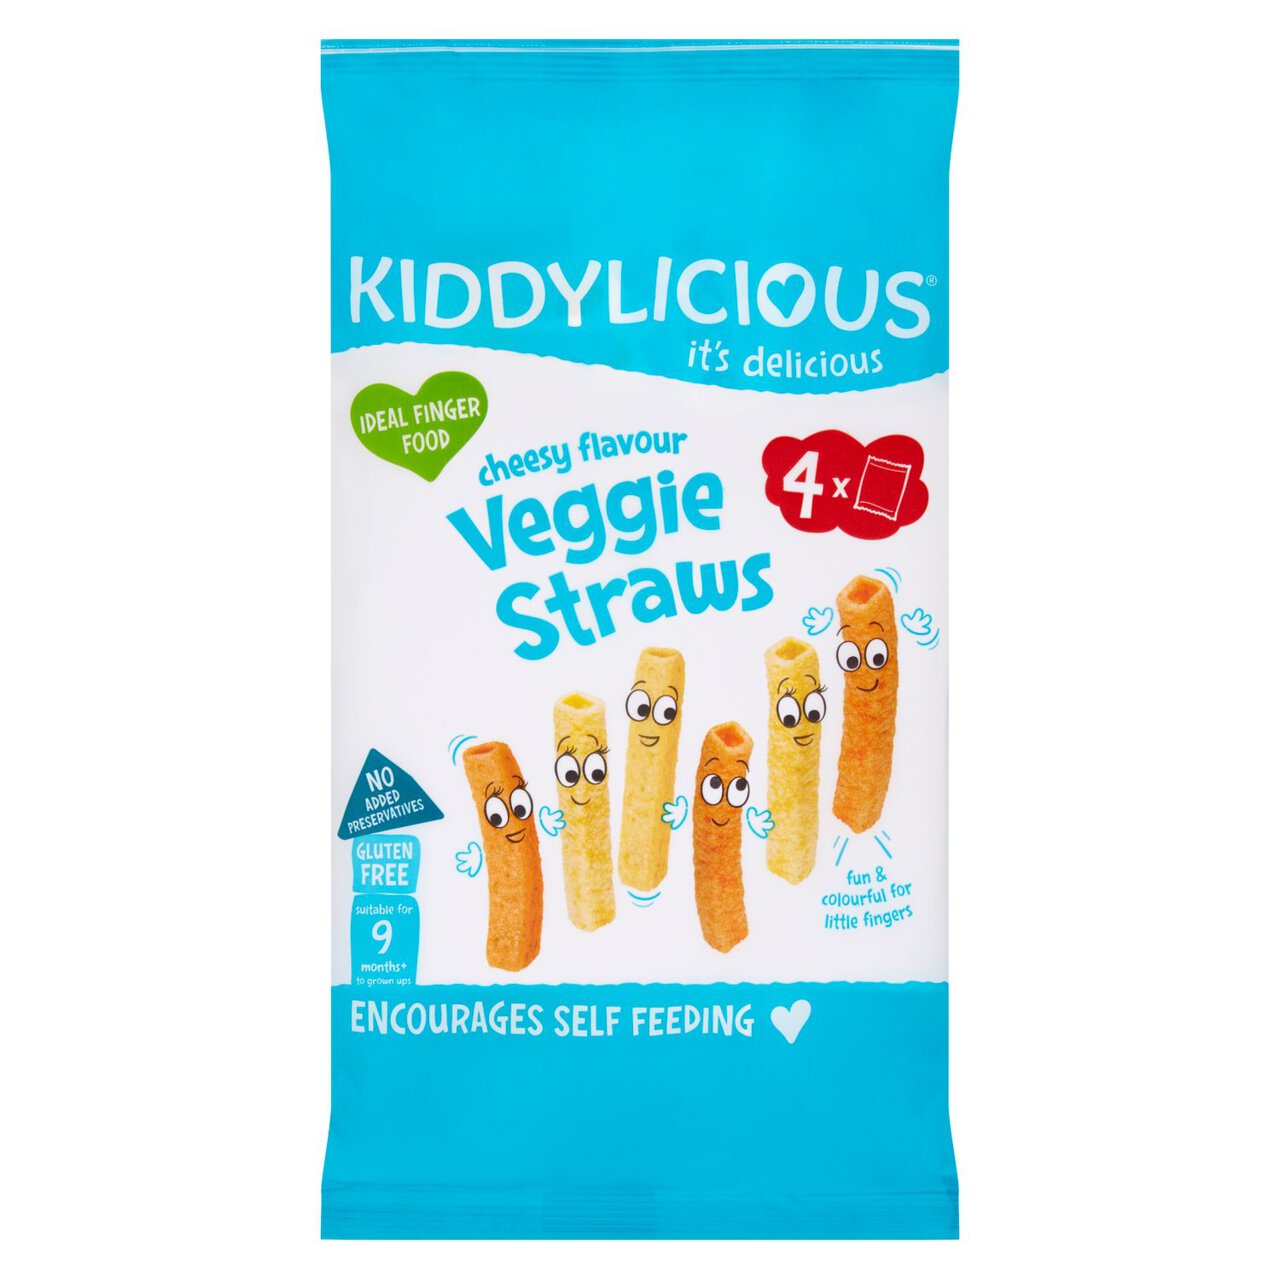 Kiddylicious Cheesy Veggie Straws, 9 mths+ Multipack 4 x 12g